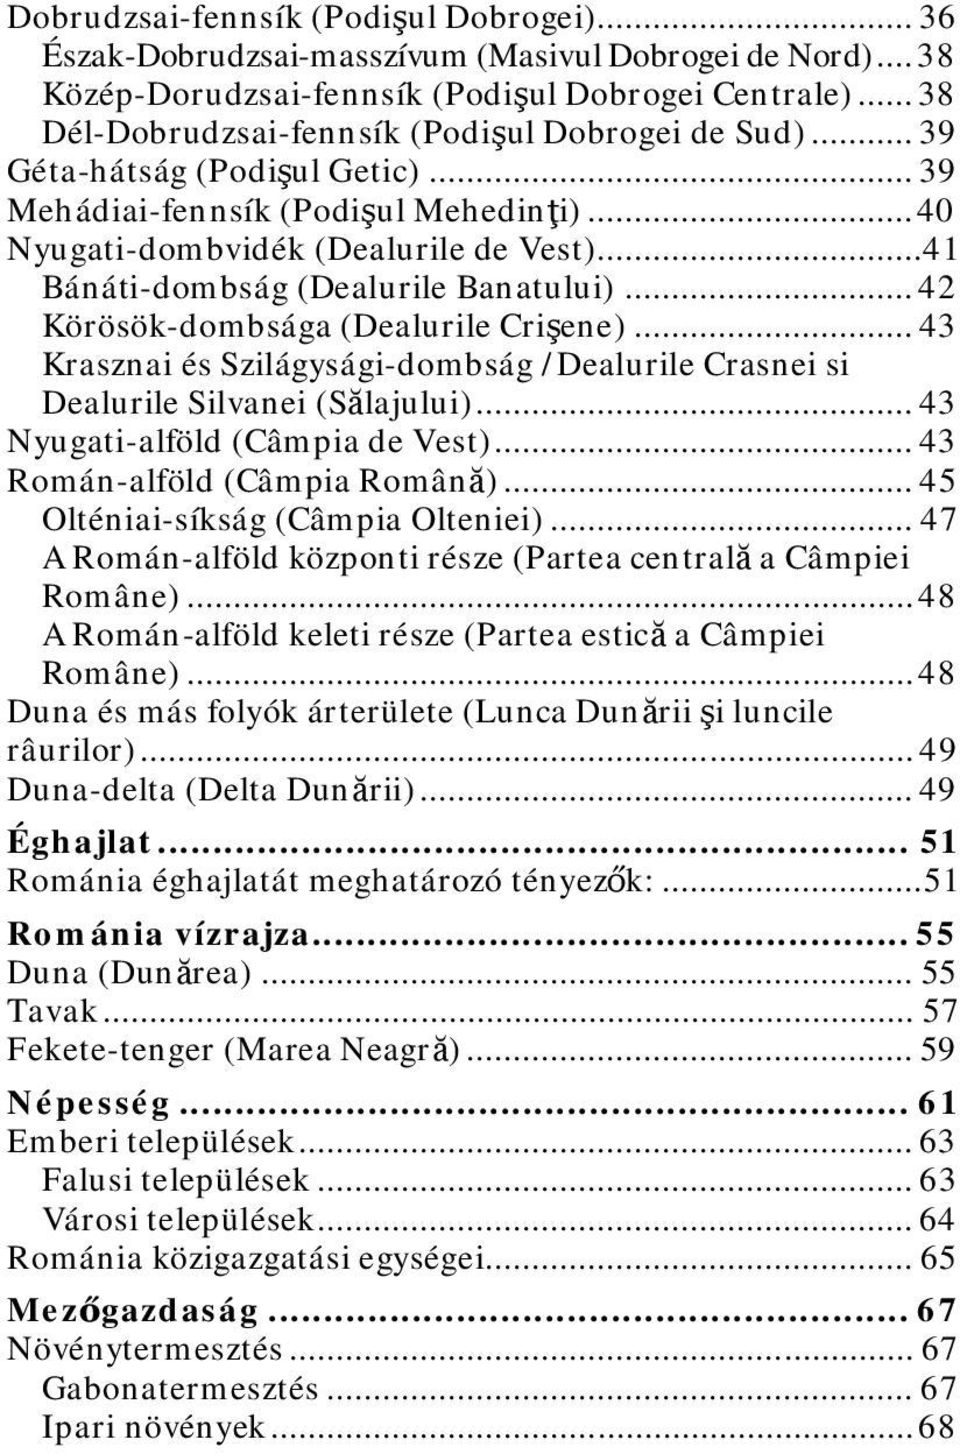 .. 41 Bánáti-dombság (Dealurile Banatului)... 42 Körösök-dombsága (Dealurile Crişene)... 43 Krasznai és Szilágysági-dombság /Dealurile Crasnei si Dealurile Silvanei (Sălajului).